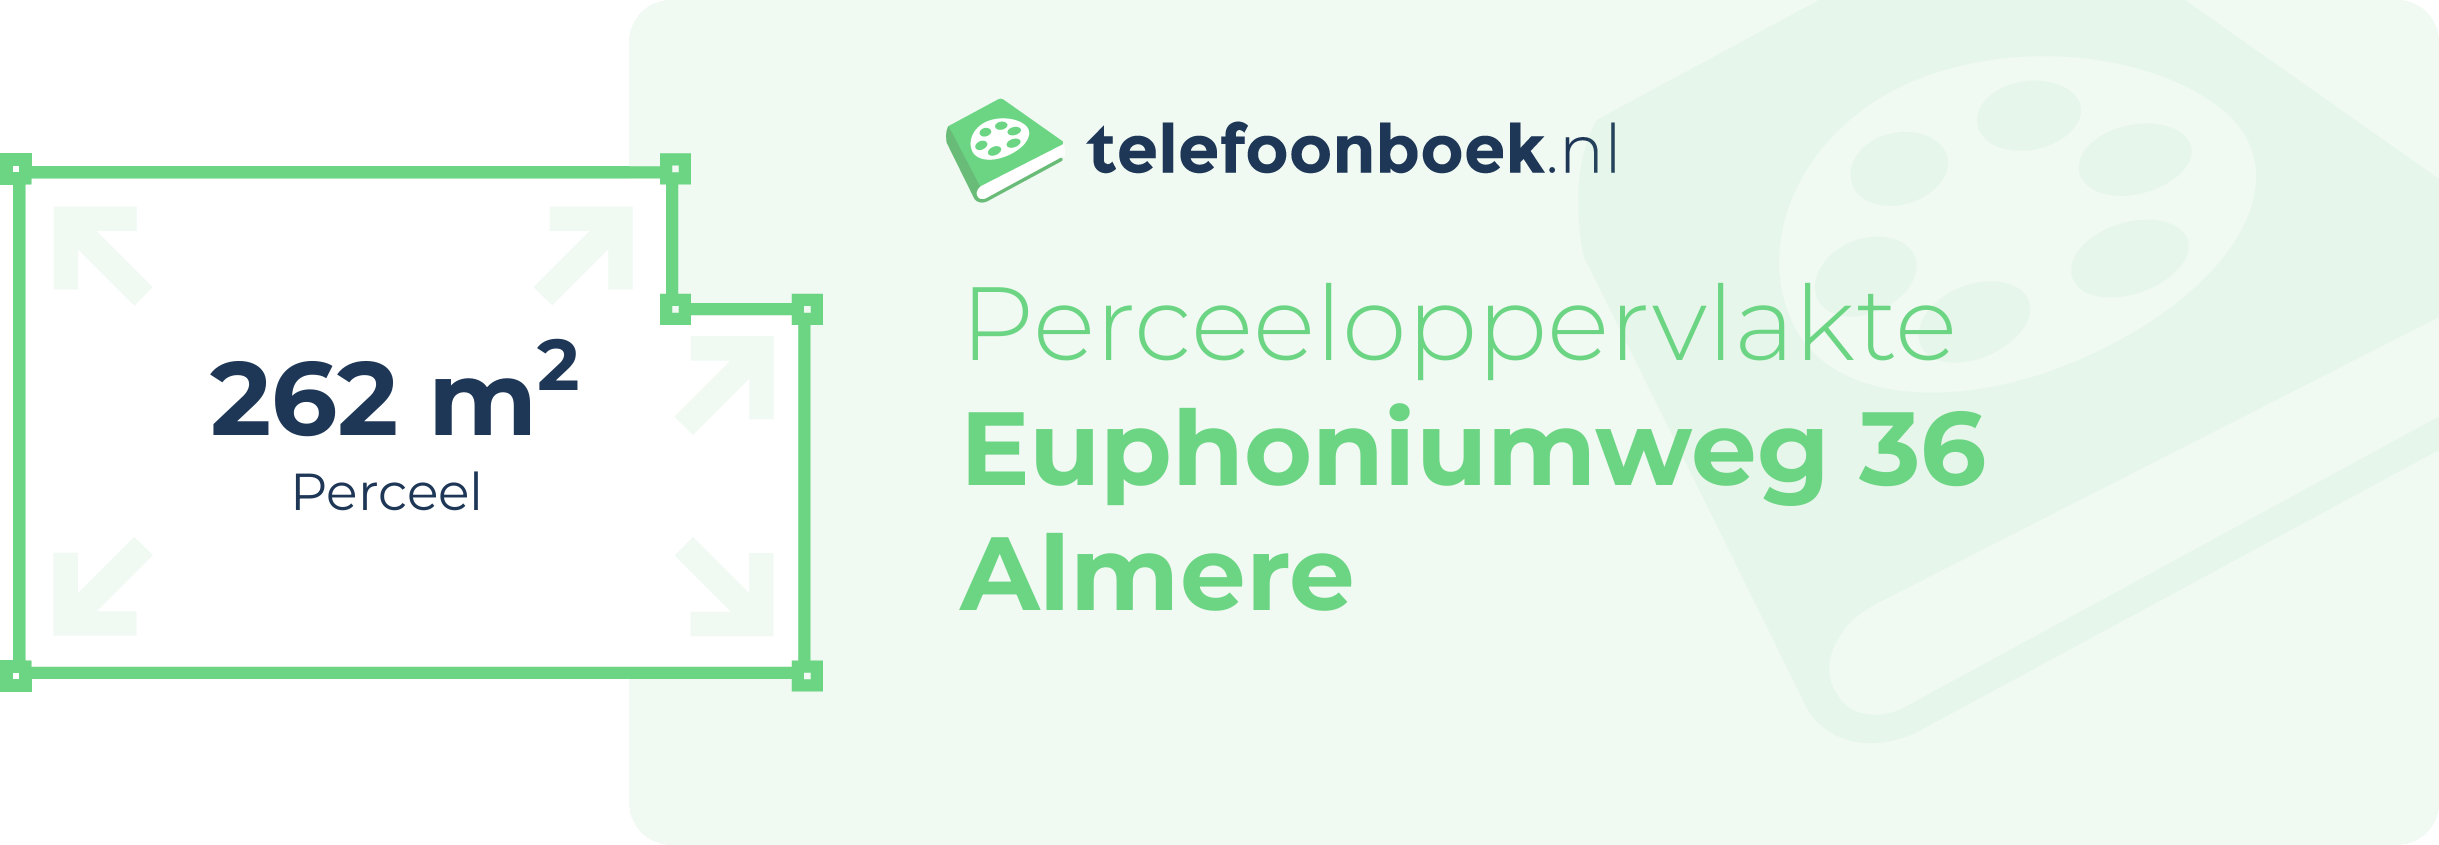 Perceeloppervlakte Euphoniumweg 36 Almere